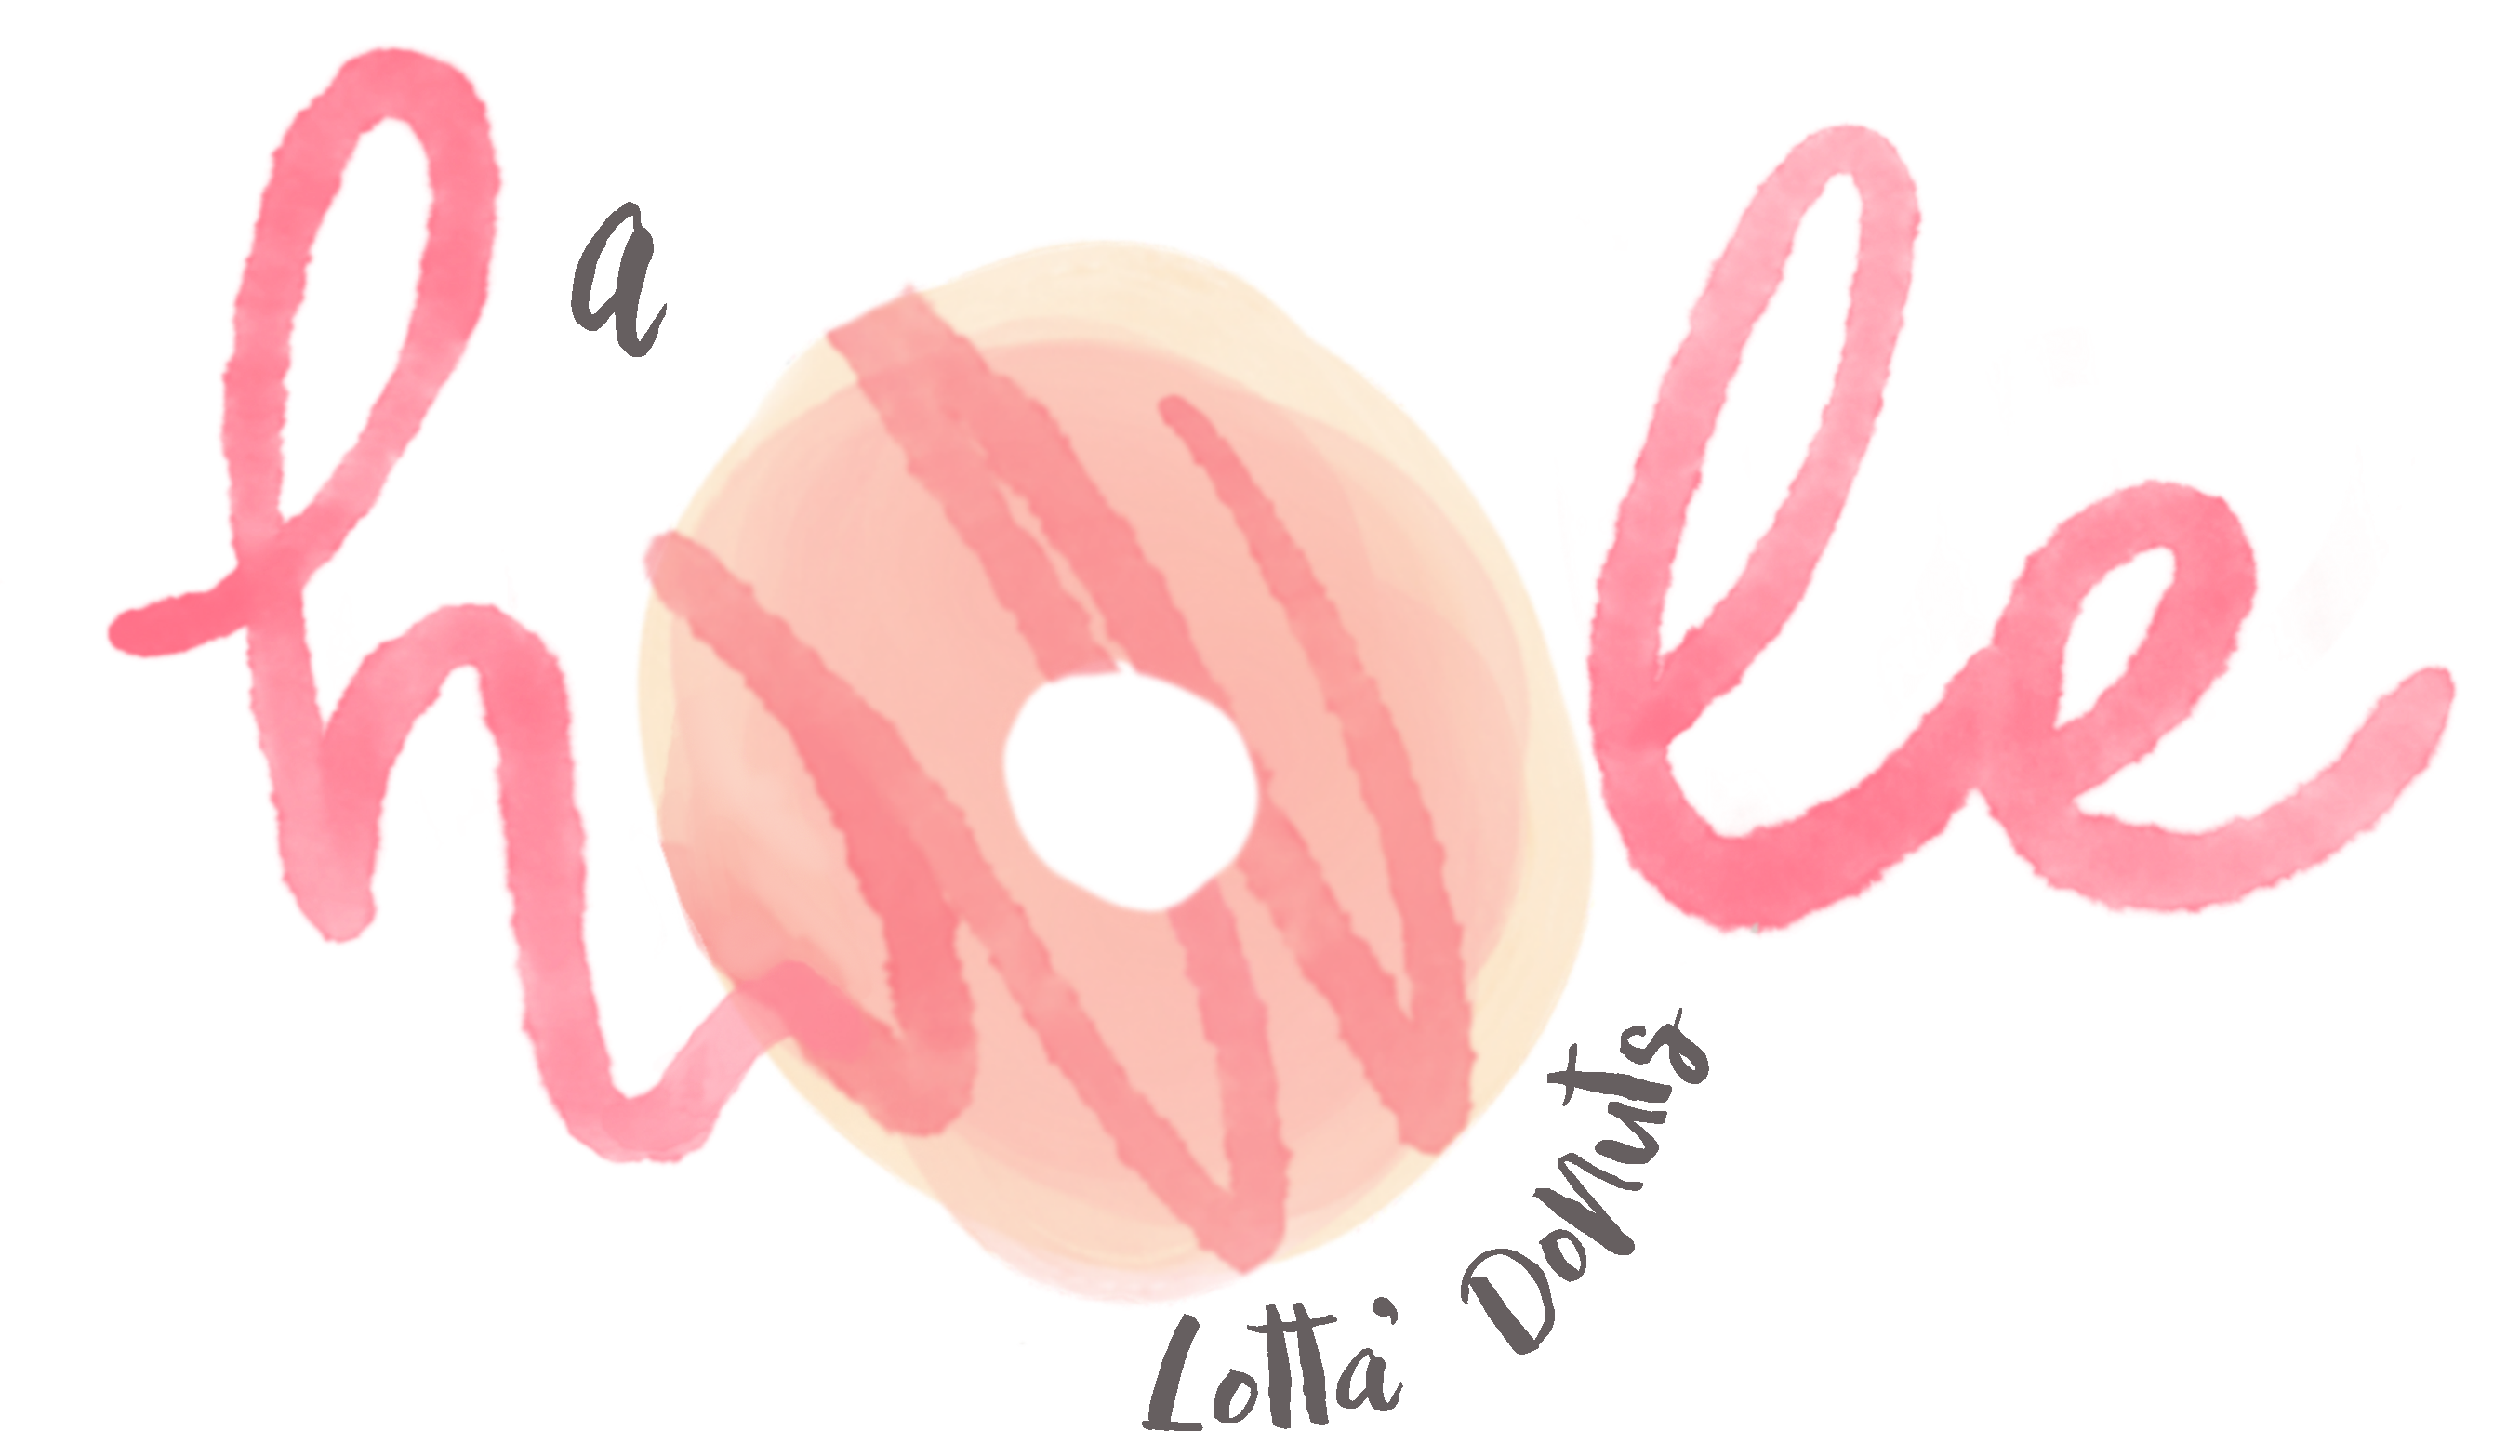 A HOLE Lotta Donuts